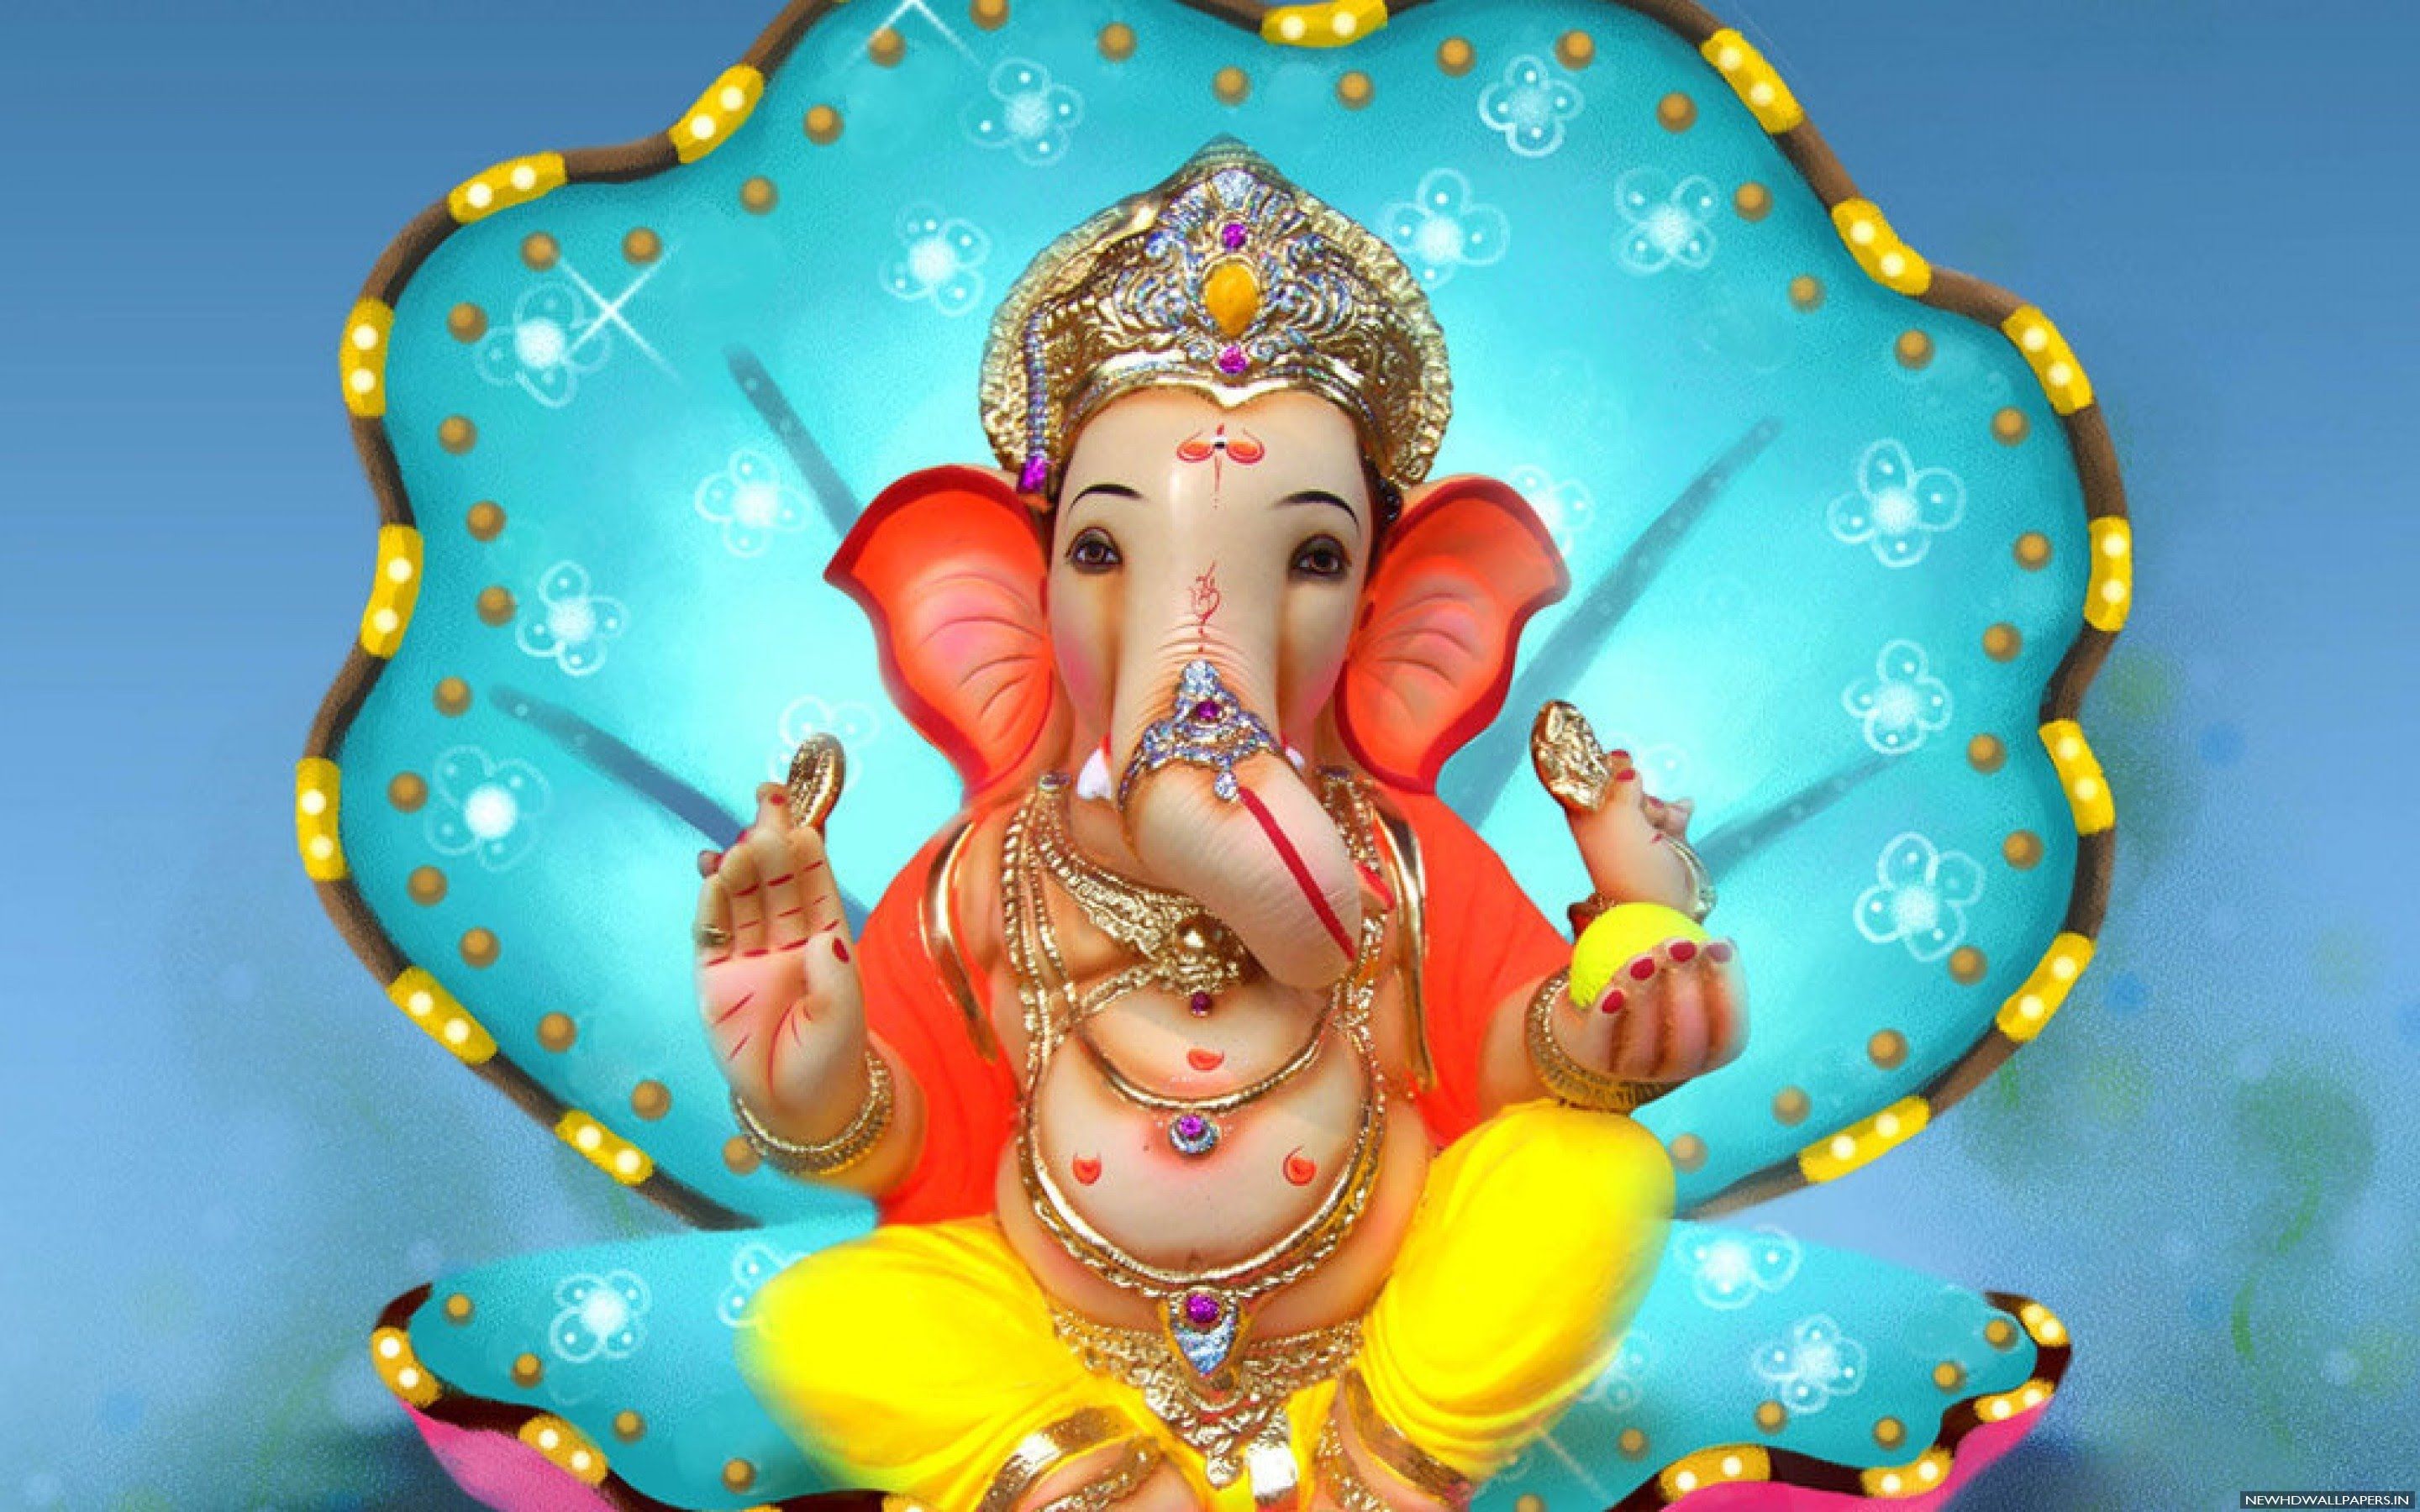 Ganesh images hd wallpaper free download ganesh wallpaper happy ganesh chaturthi images ganpati photo hd